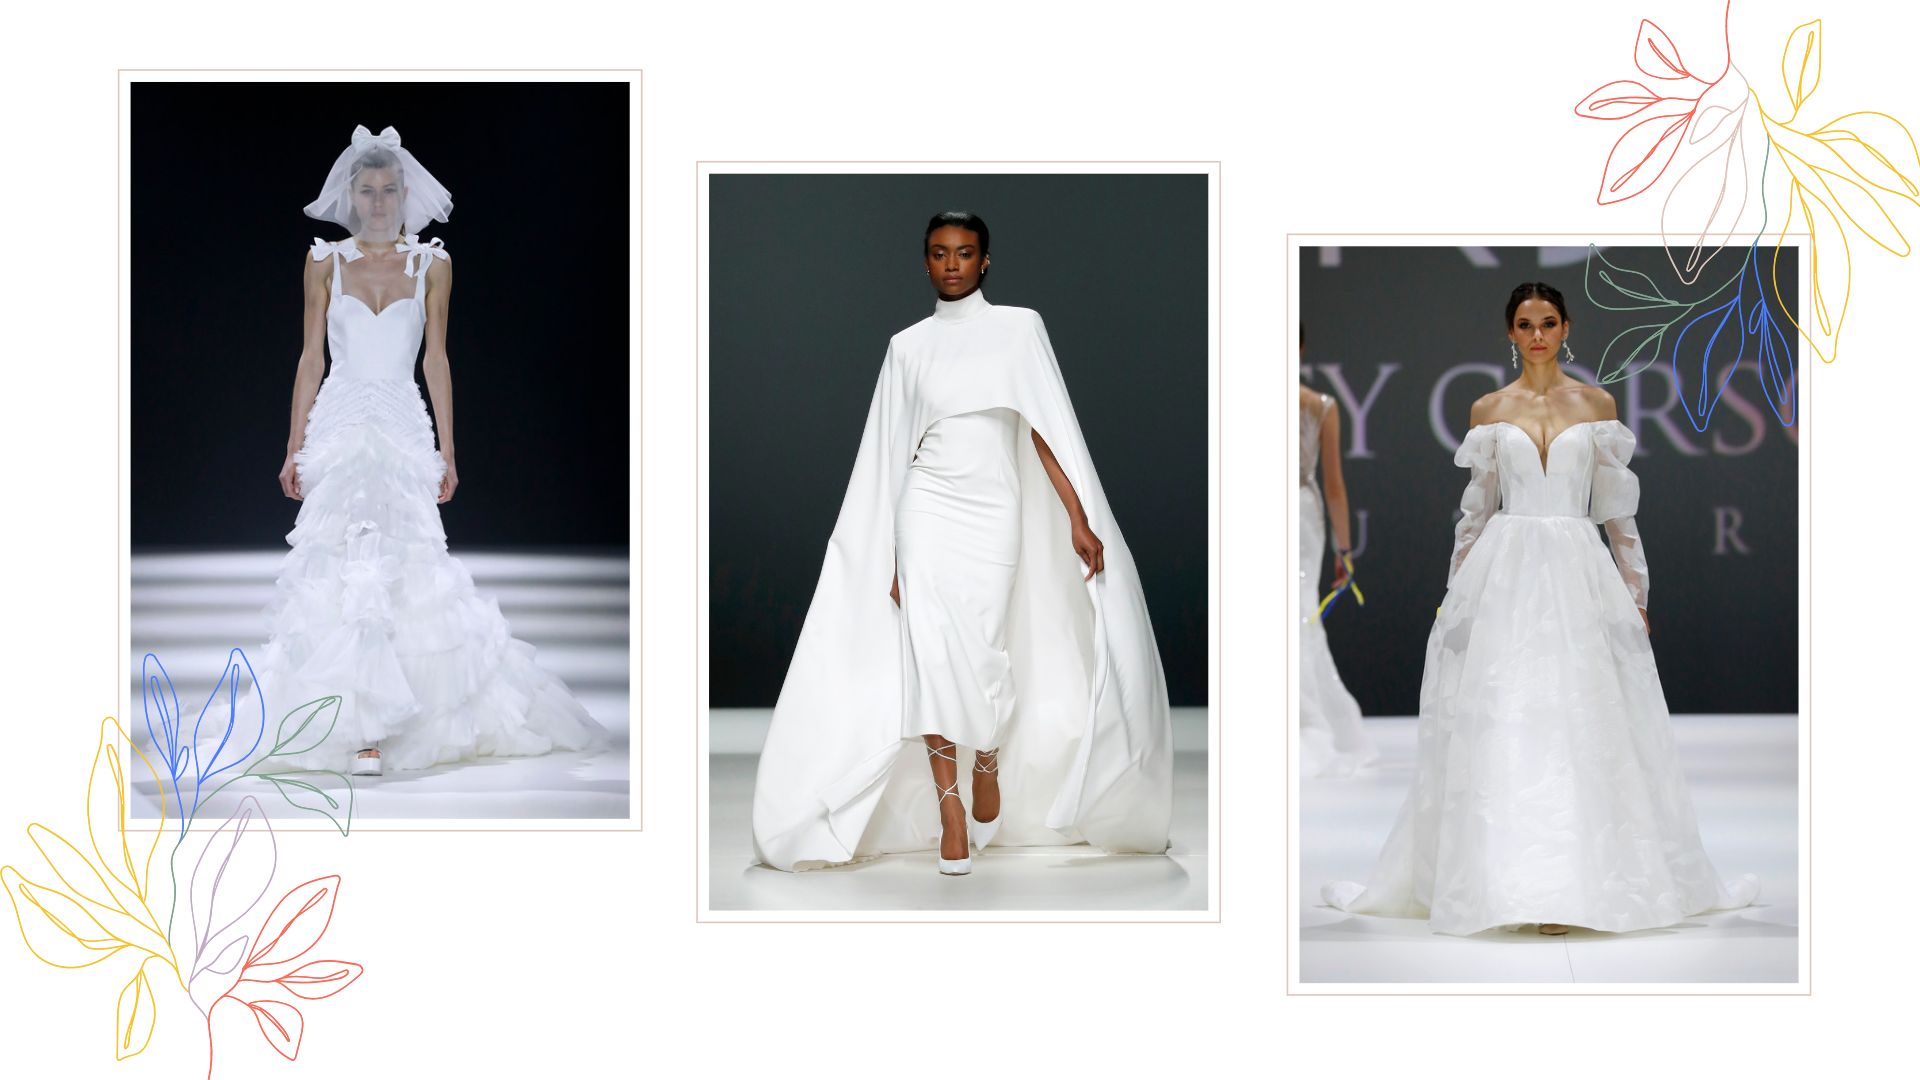 2023 Wedding Dress Trends: Feathers, Thigh-High Slits